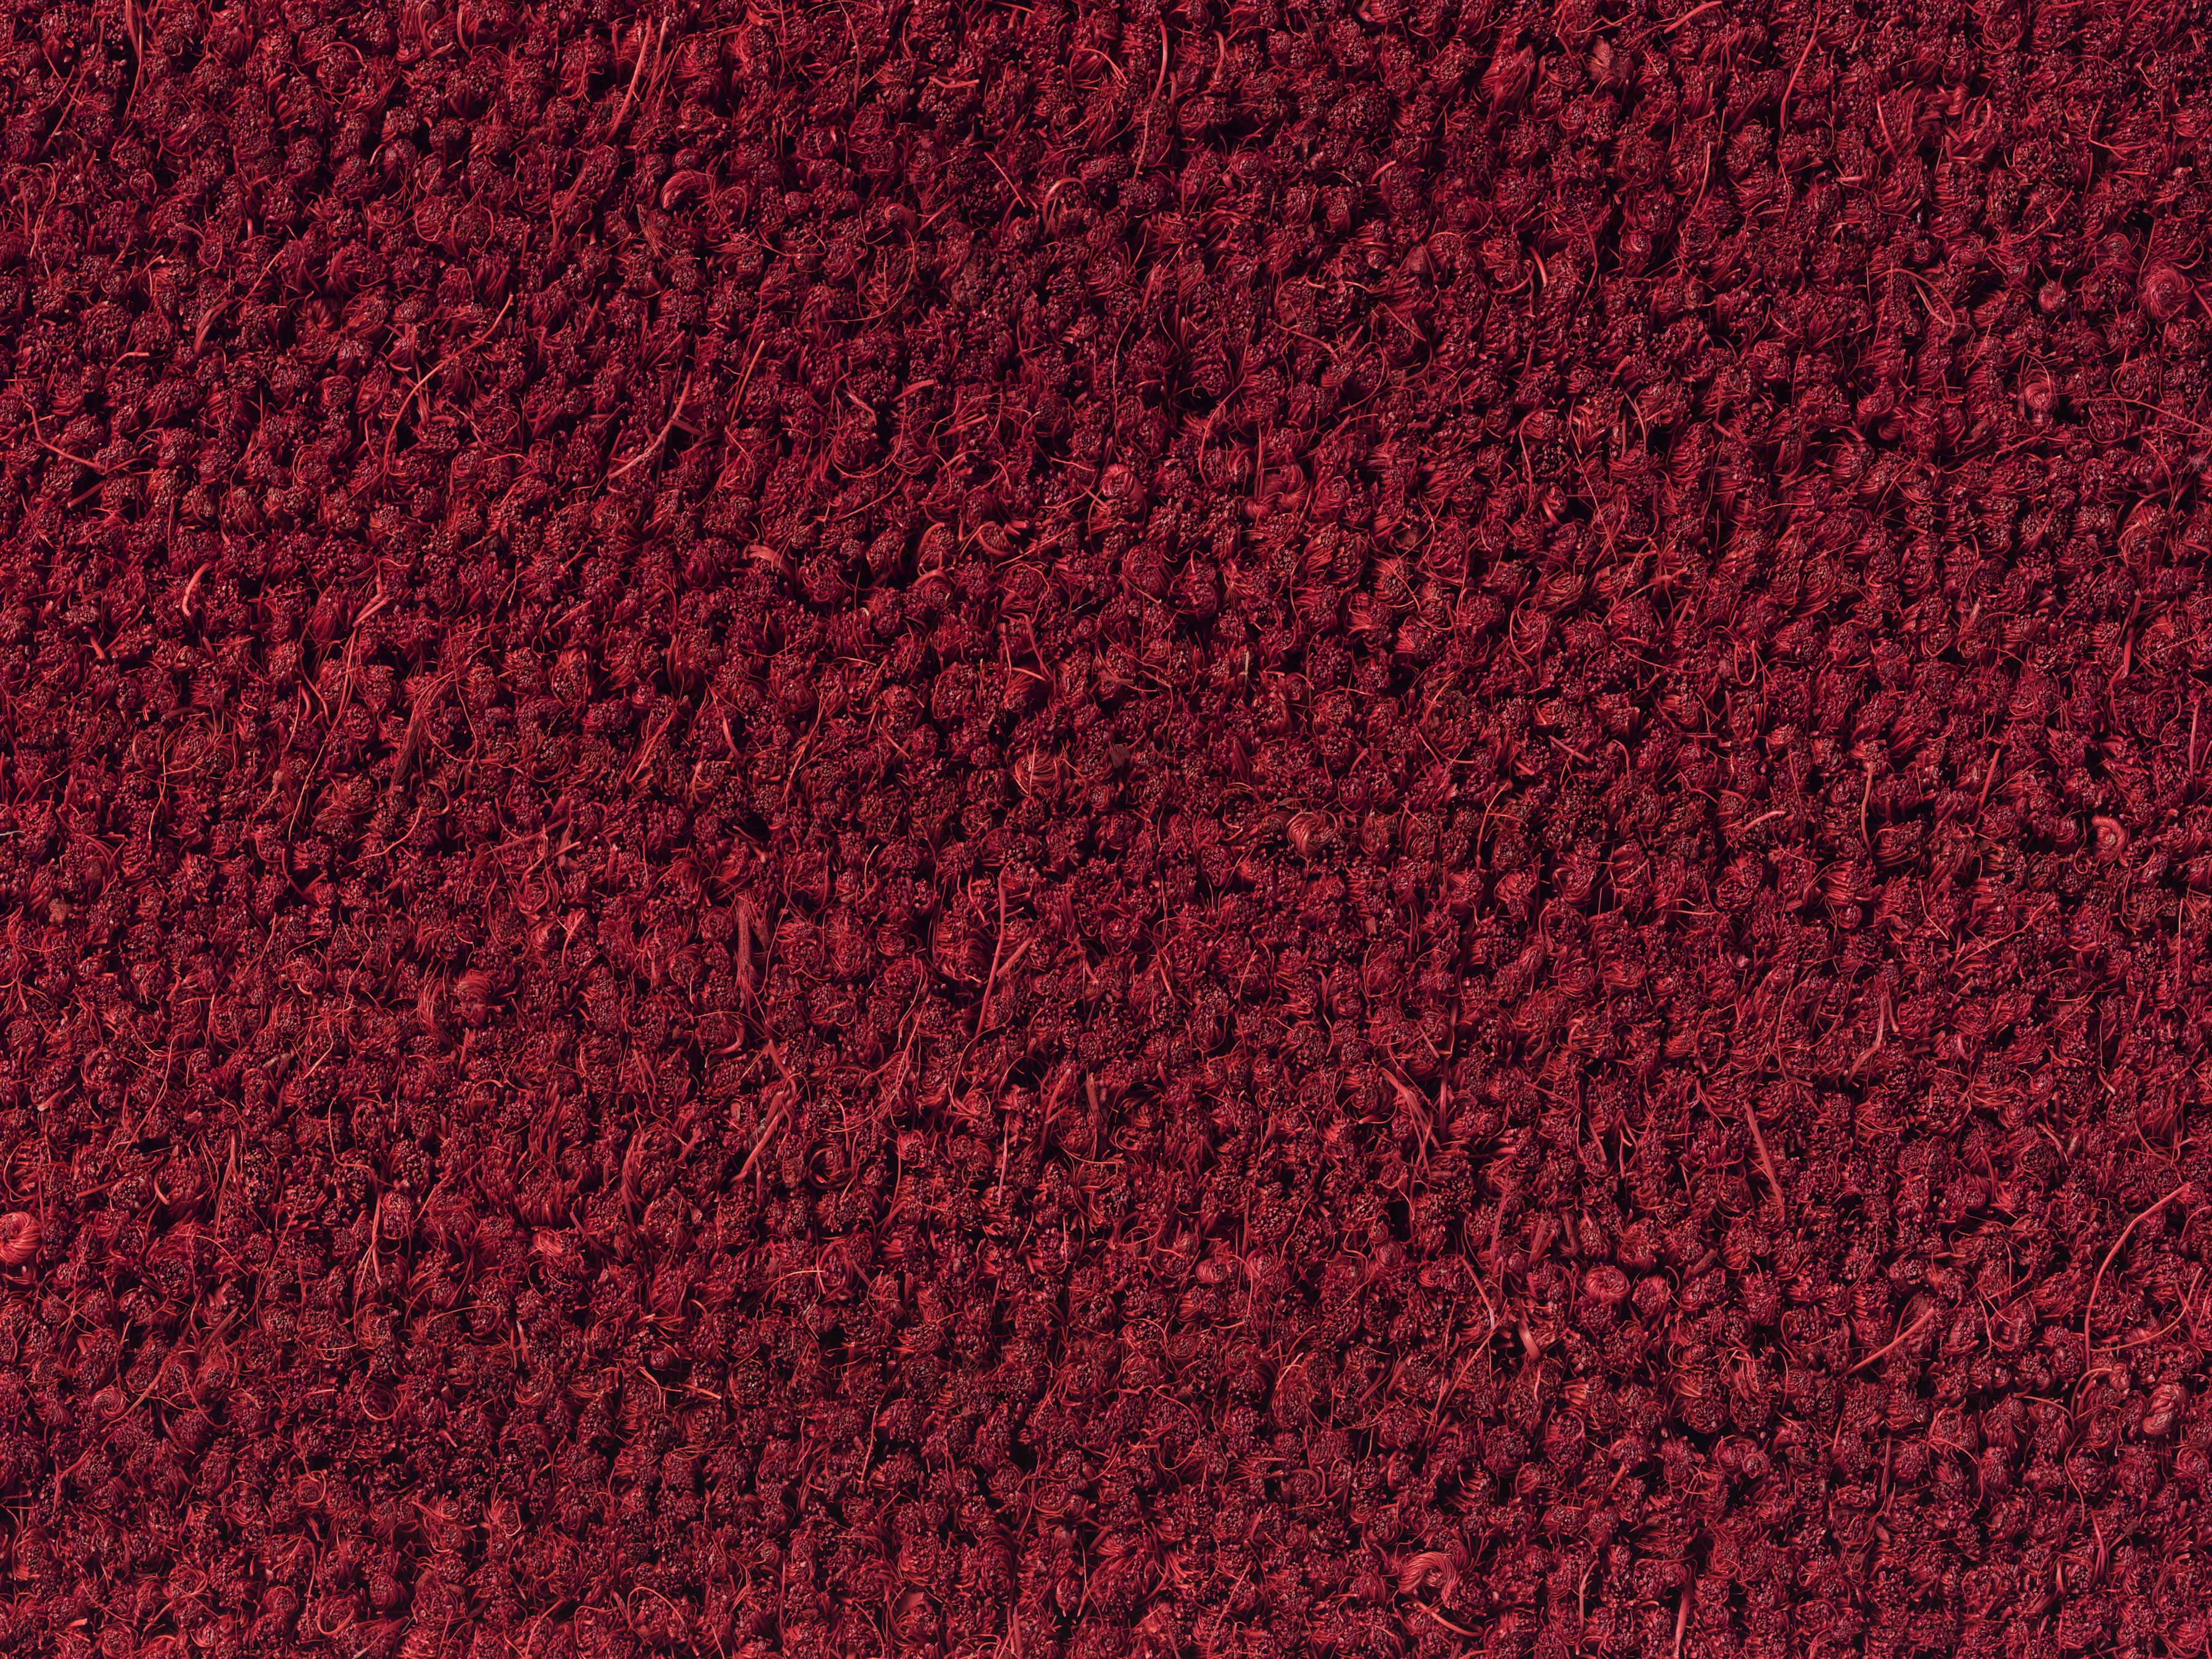 Kokosbosse III Rinotap 17 mm rot Coupon (Rolle) 200 cm breit